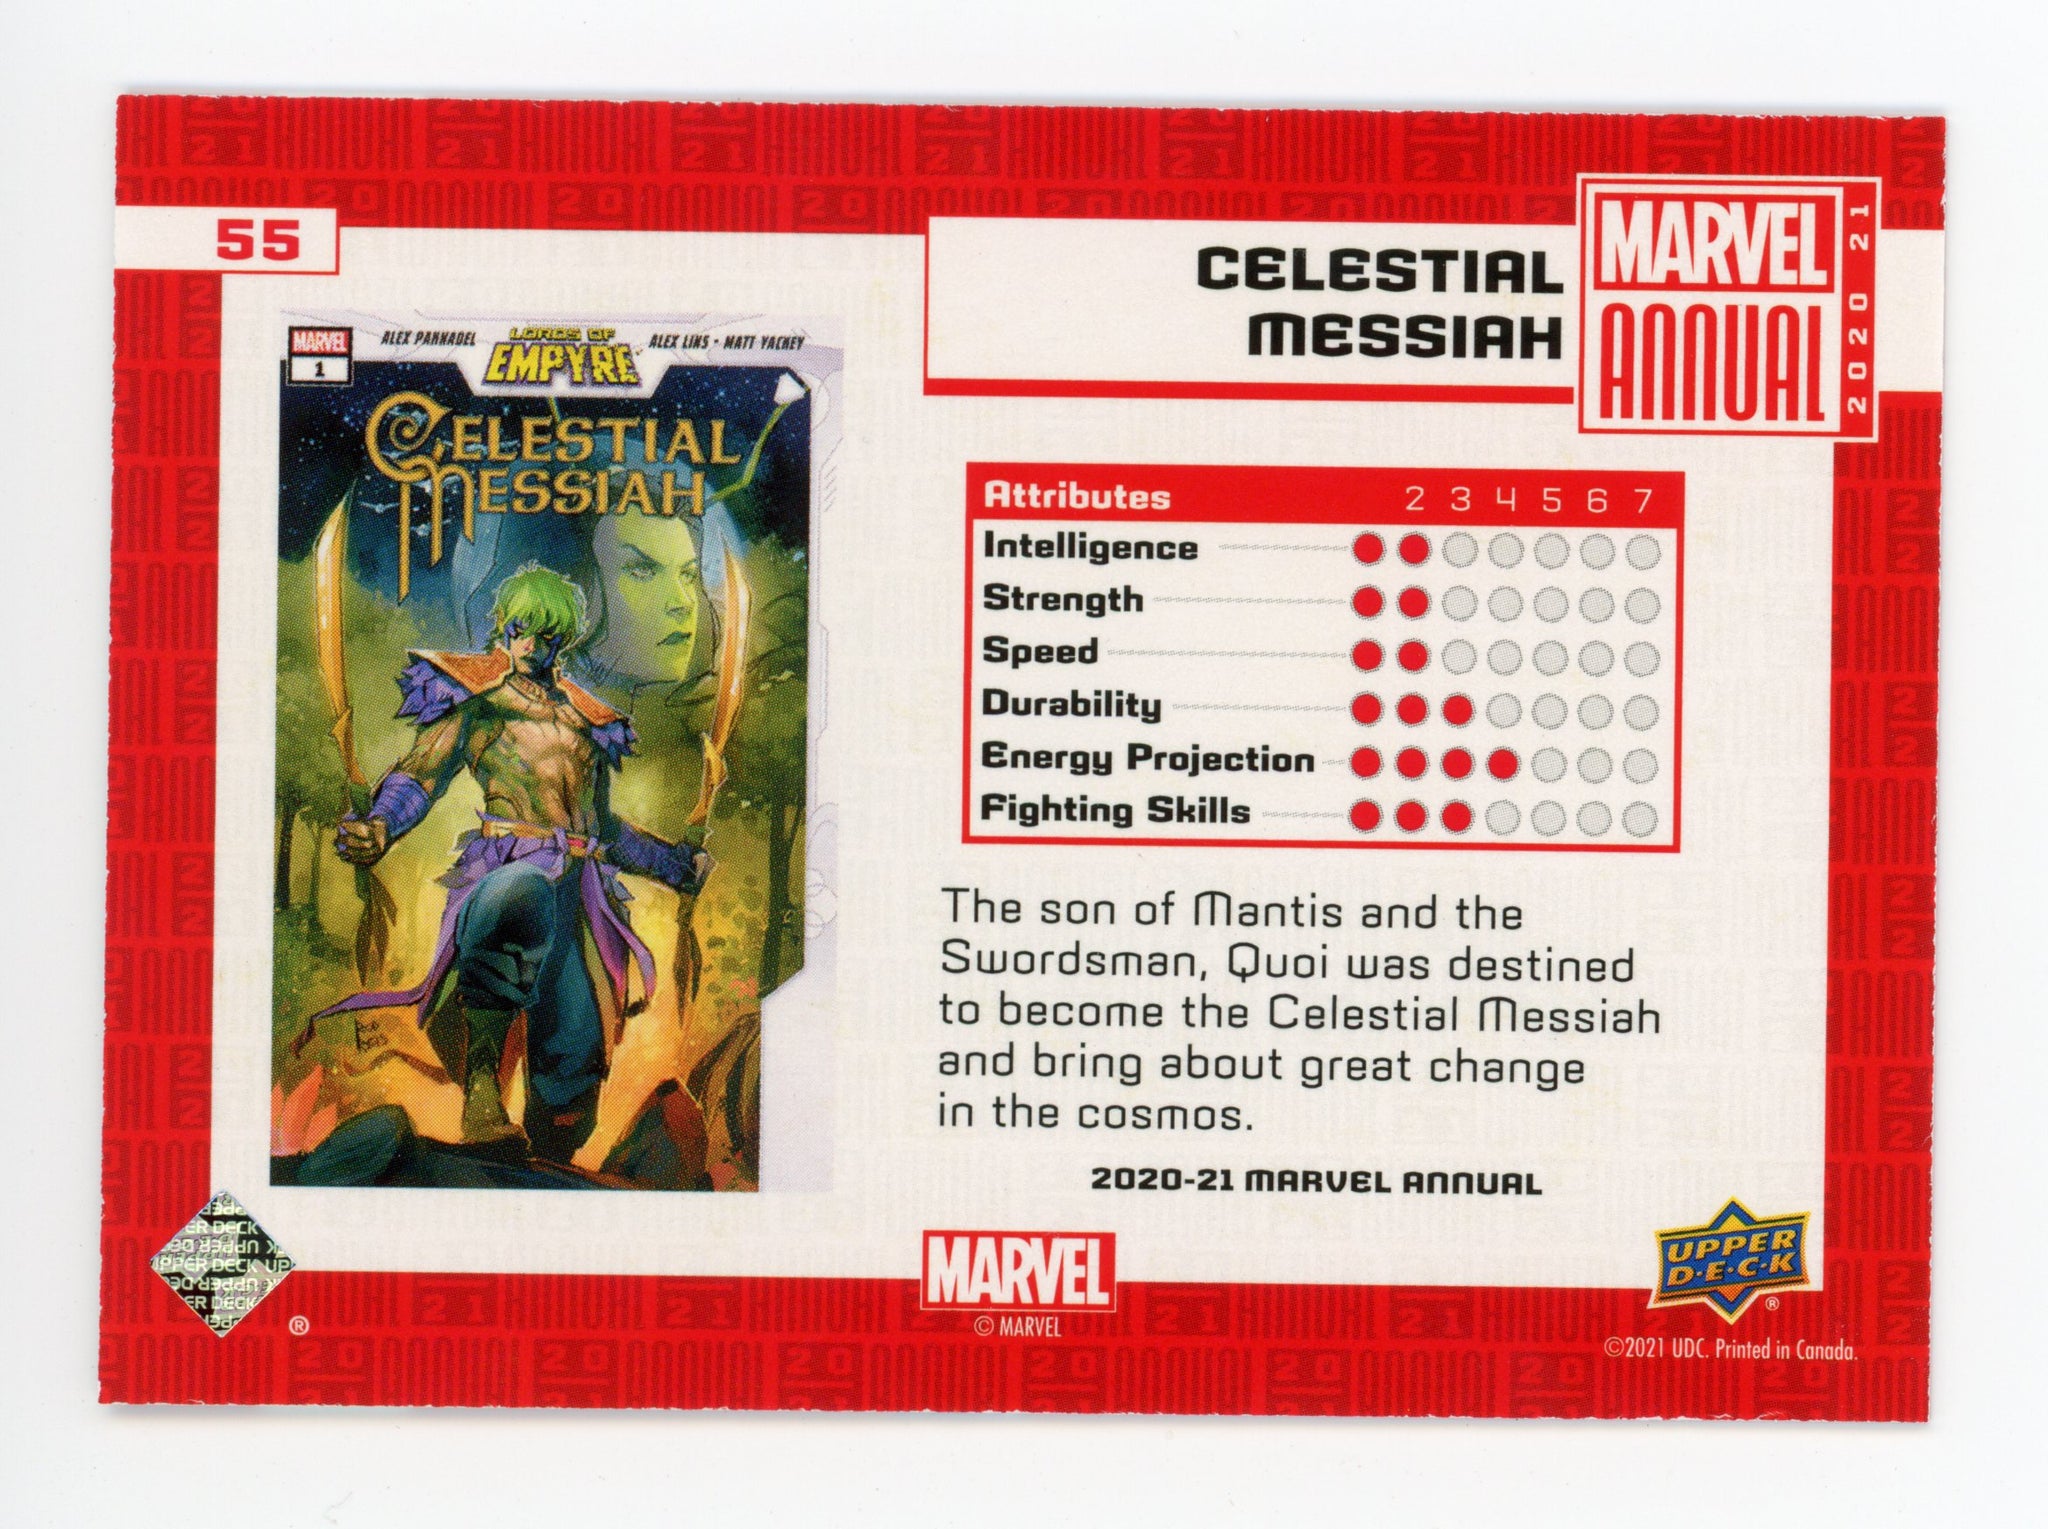 2020-2021 Celestial Messiah Variant Tier 1 Upper Deck Marvel Annual # 55